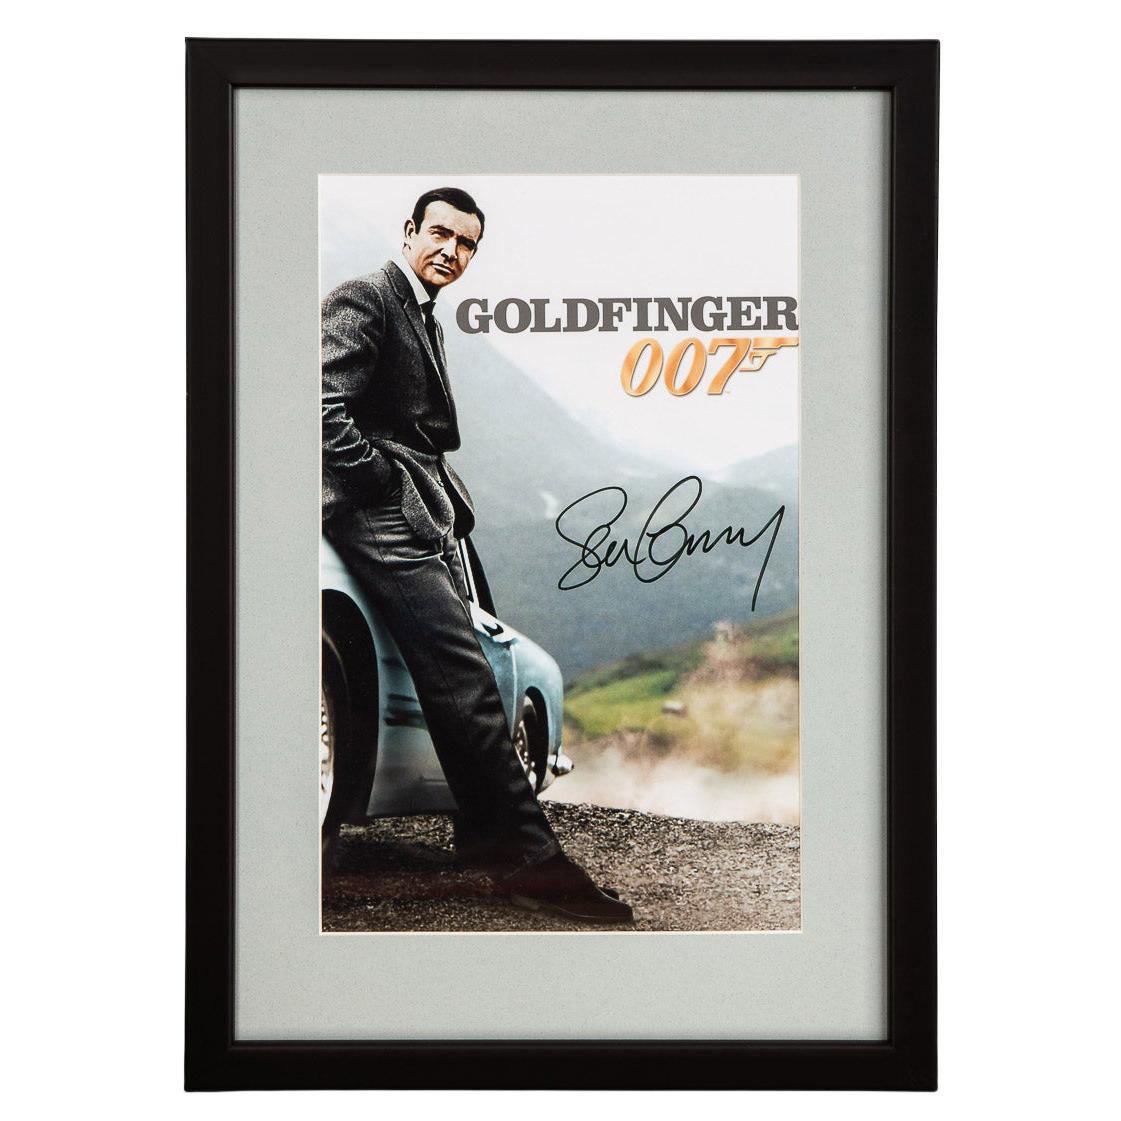 James Bond 007 Sean Connery Aston Martin Db5 Framed Photograph with Signature